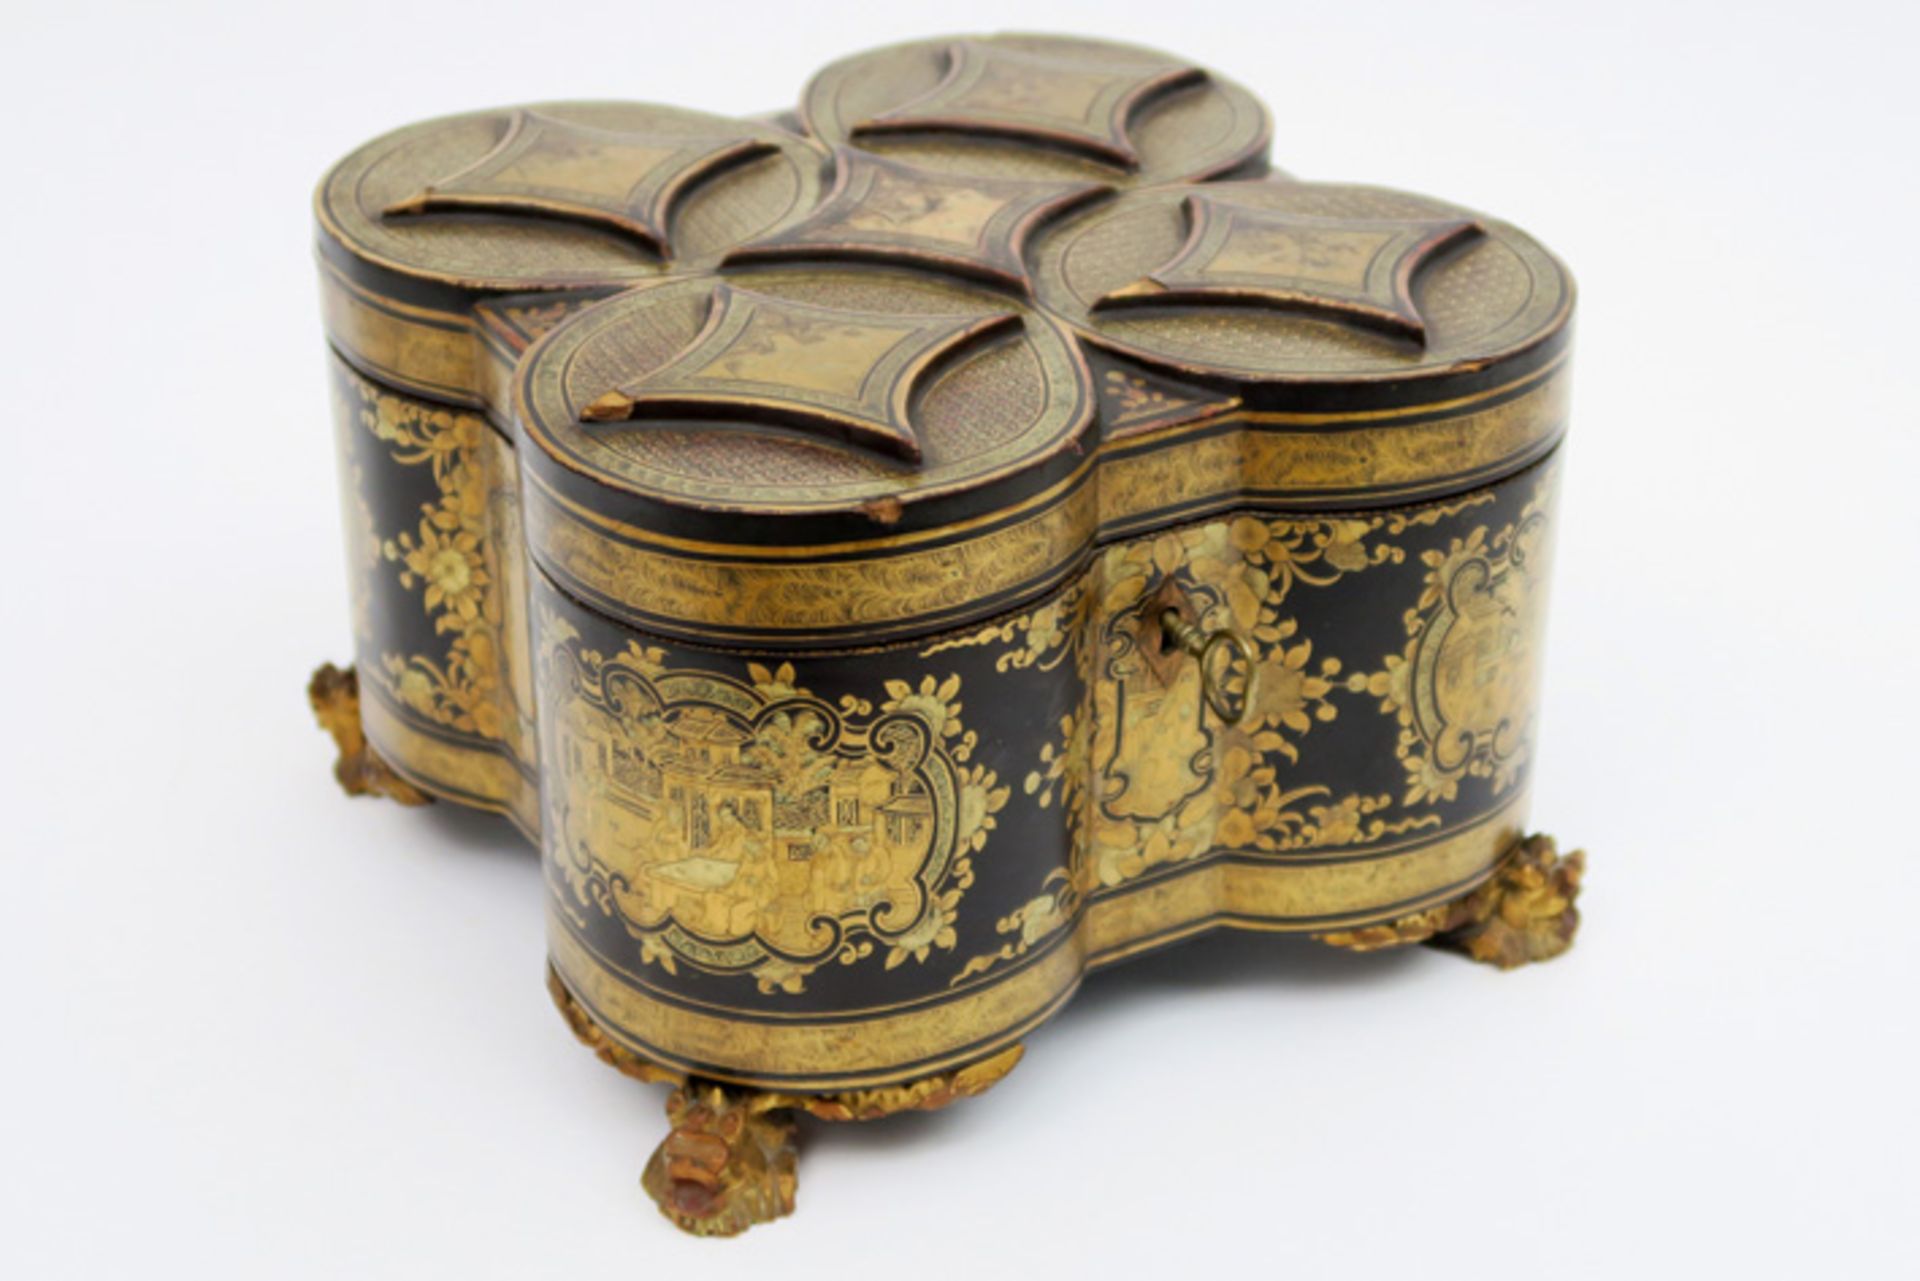 antique four-lobed lacquerware tea box with its original lidded pewter teacaddy Mooie antieke